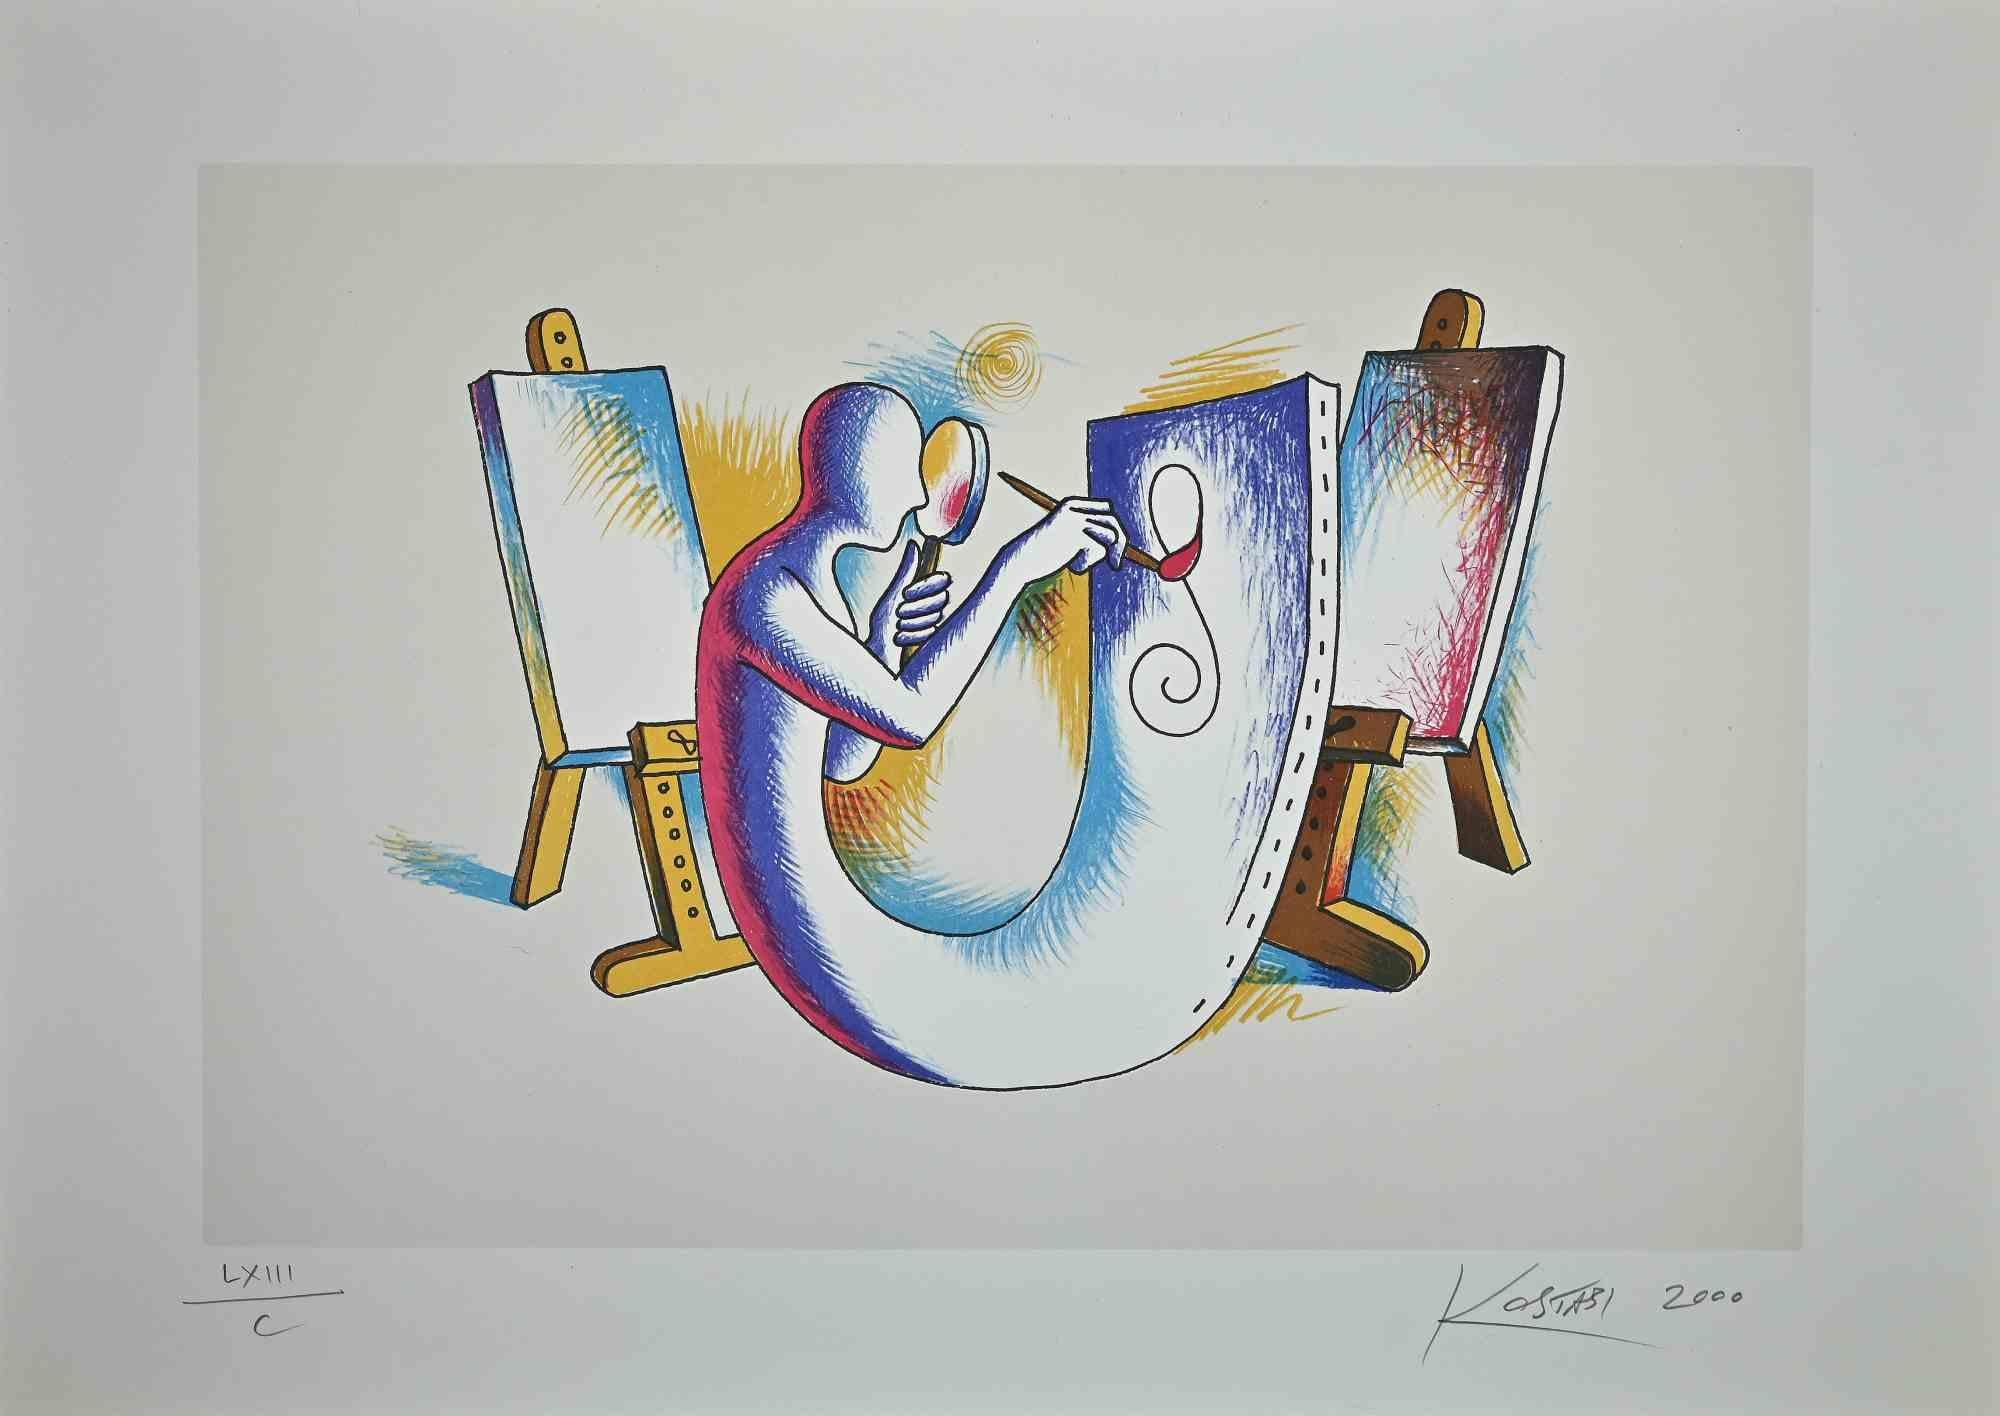 Mark Kostabi Figurative Print - The Painter's Atelier - Original Lithograph by M. Kostabi - 2000